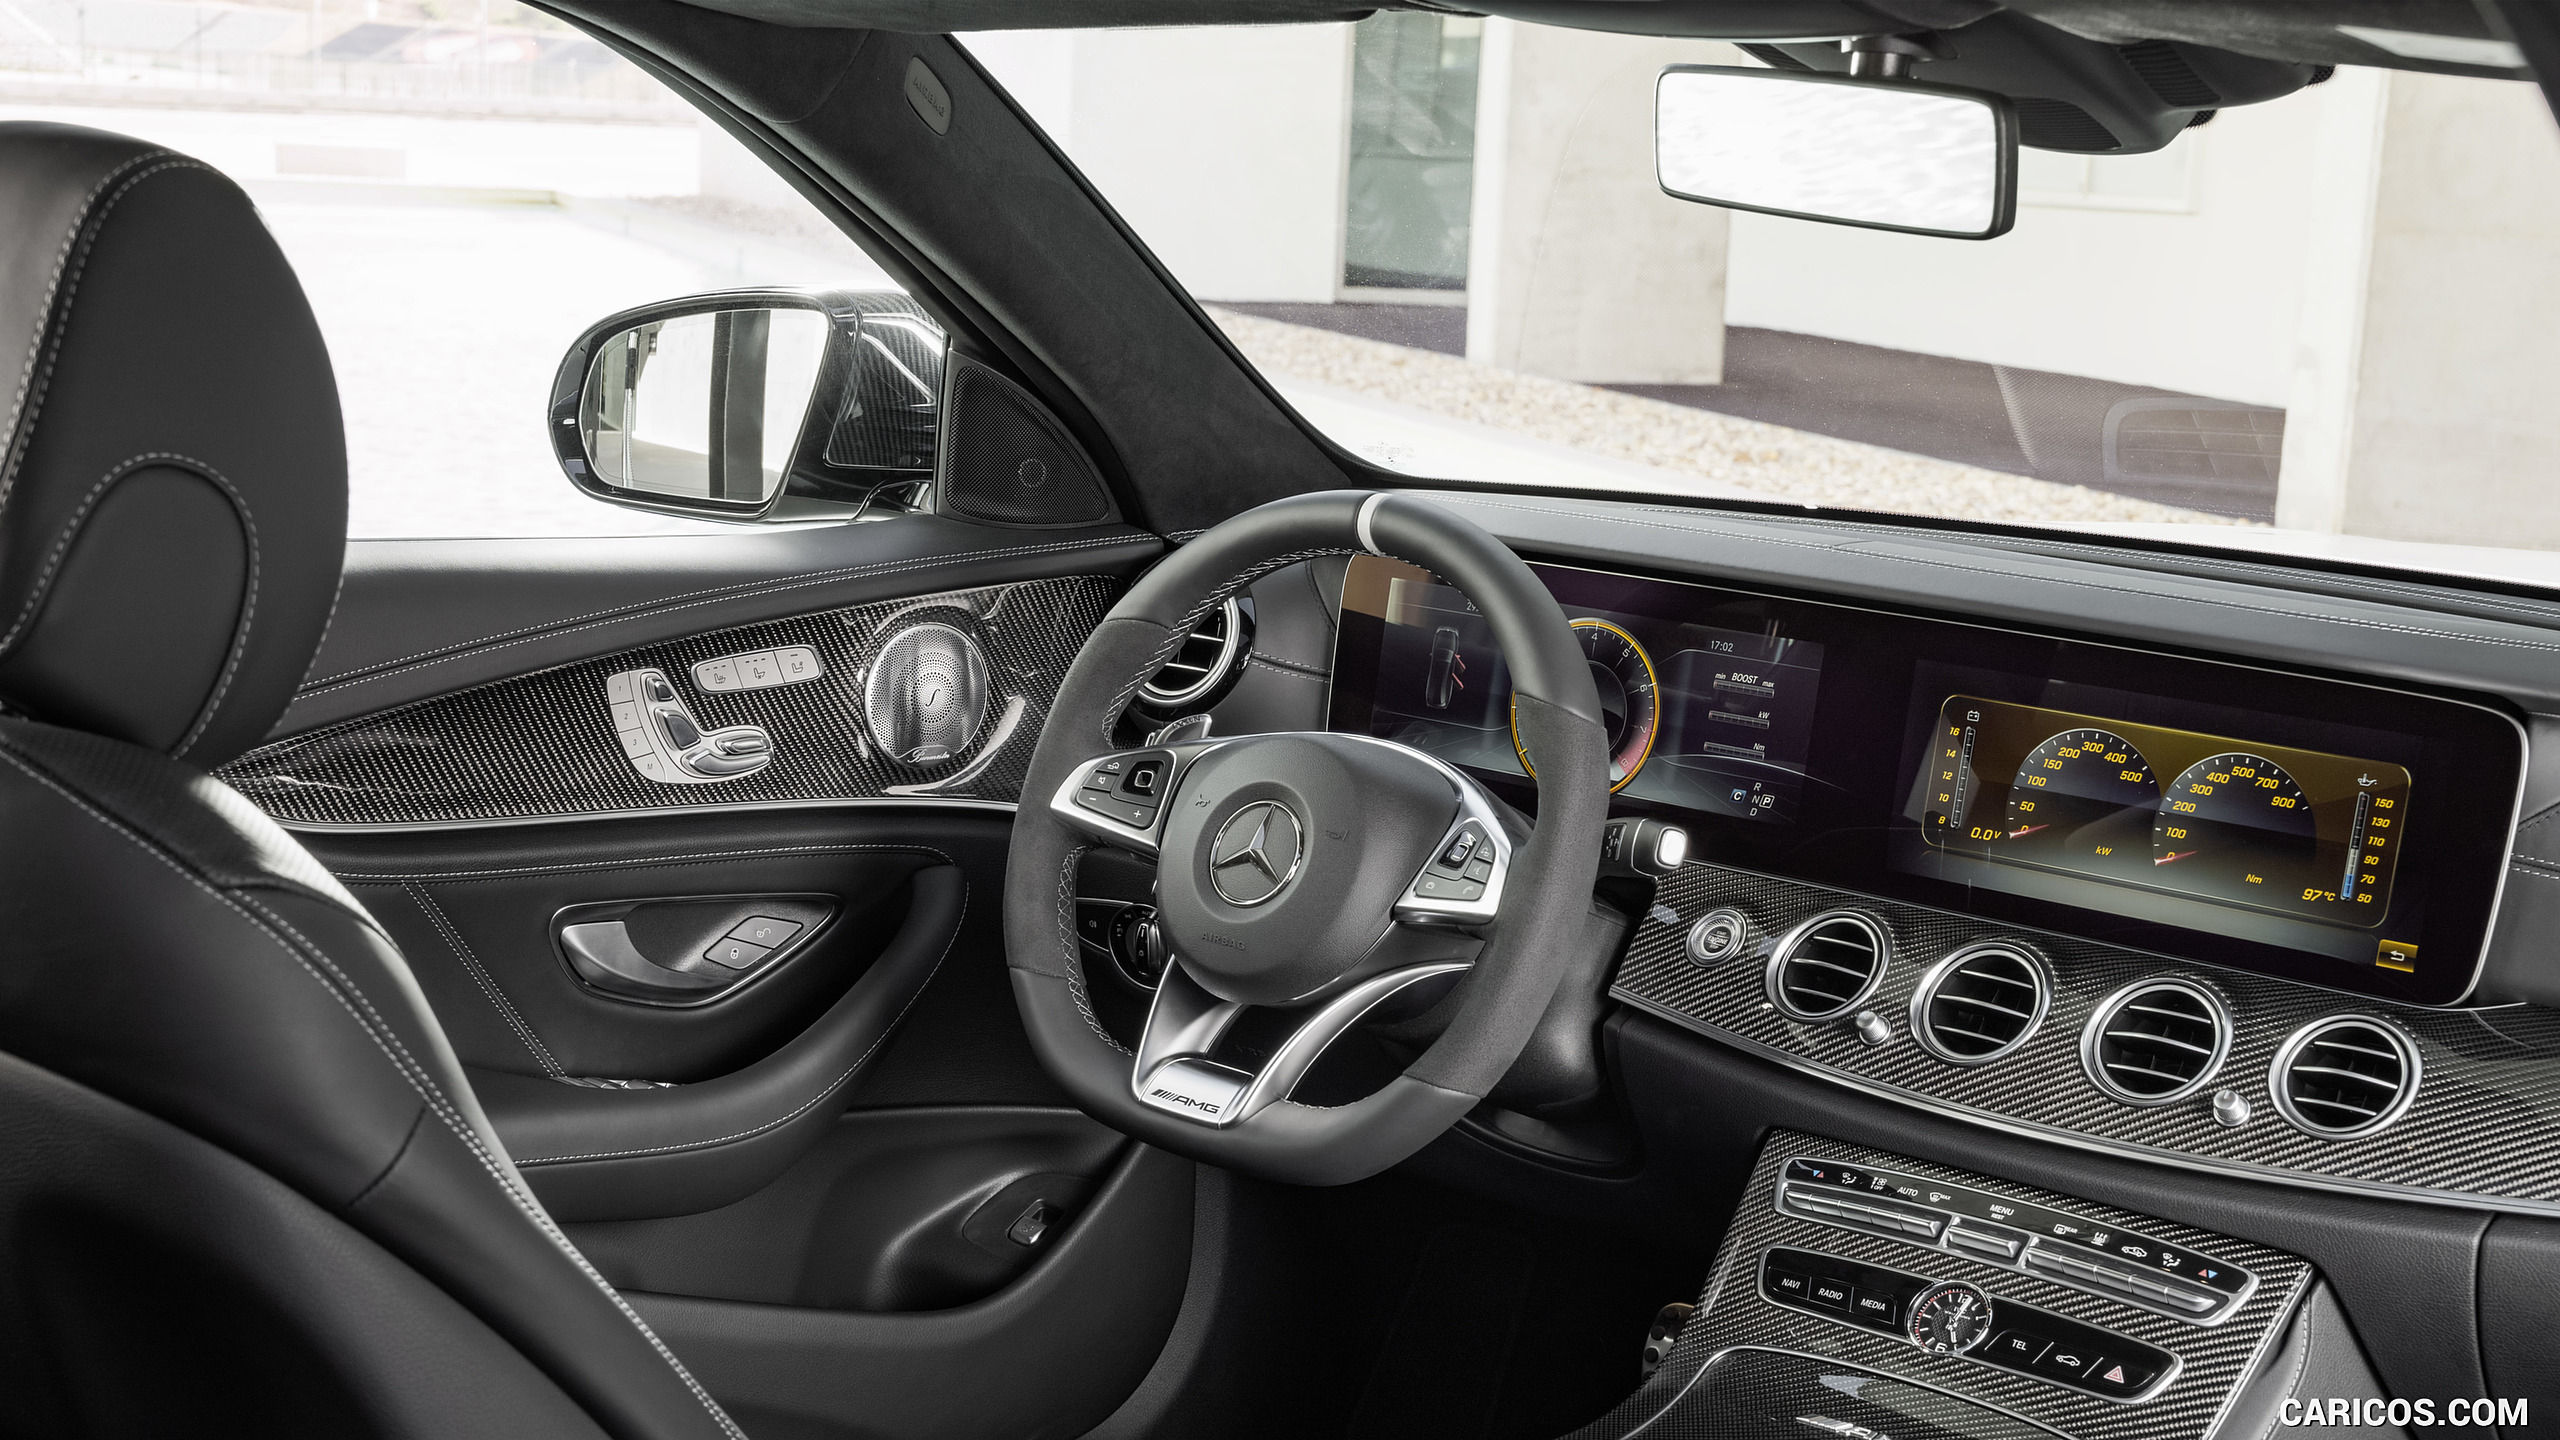 2018 Mercedes-AMG E63 S Wagon - Interior, #19 of 19